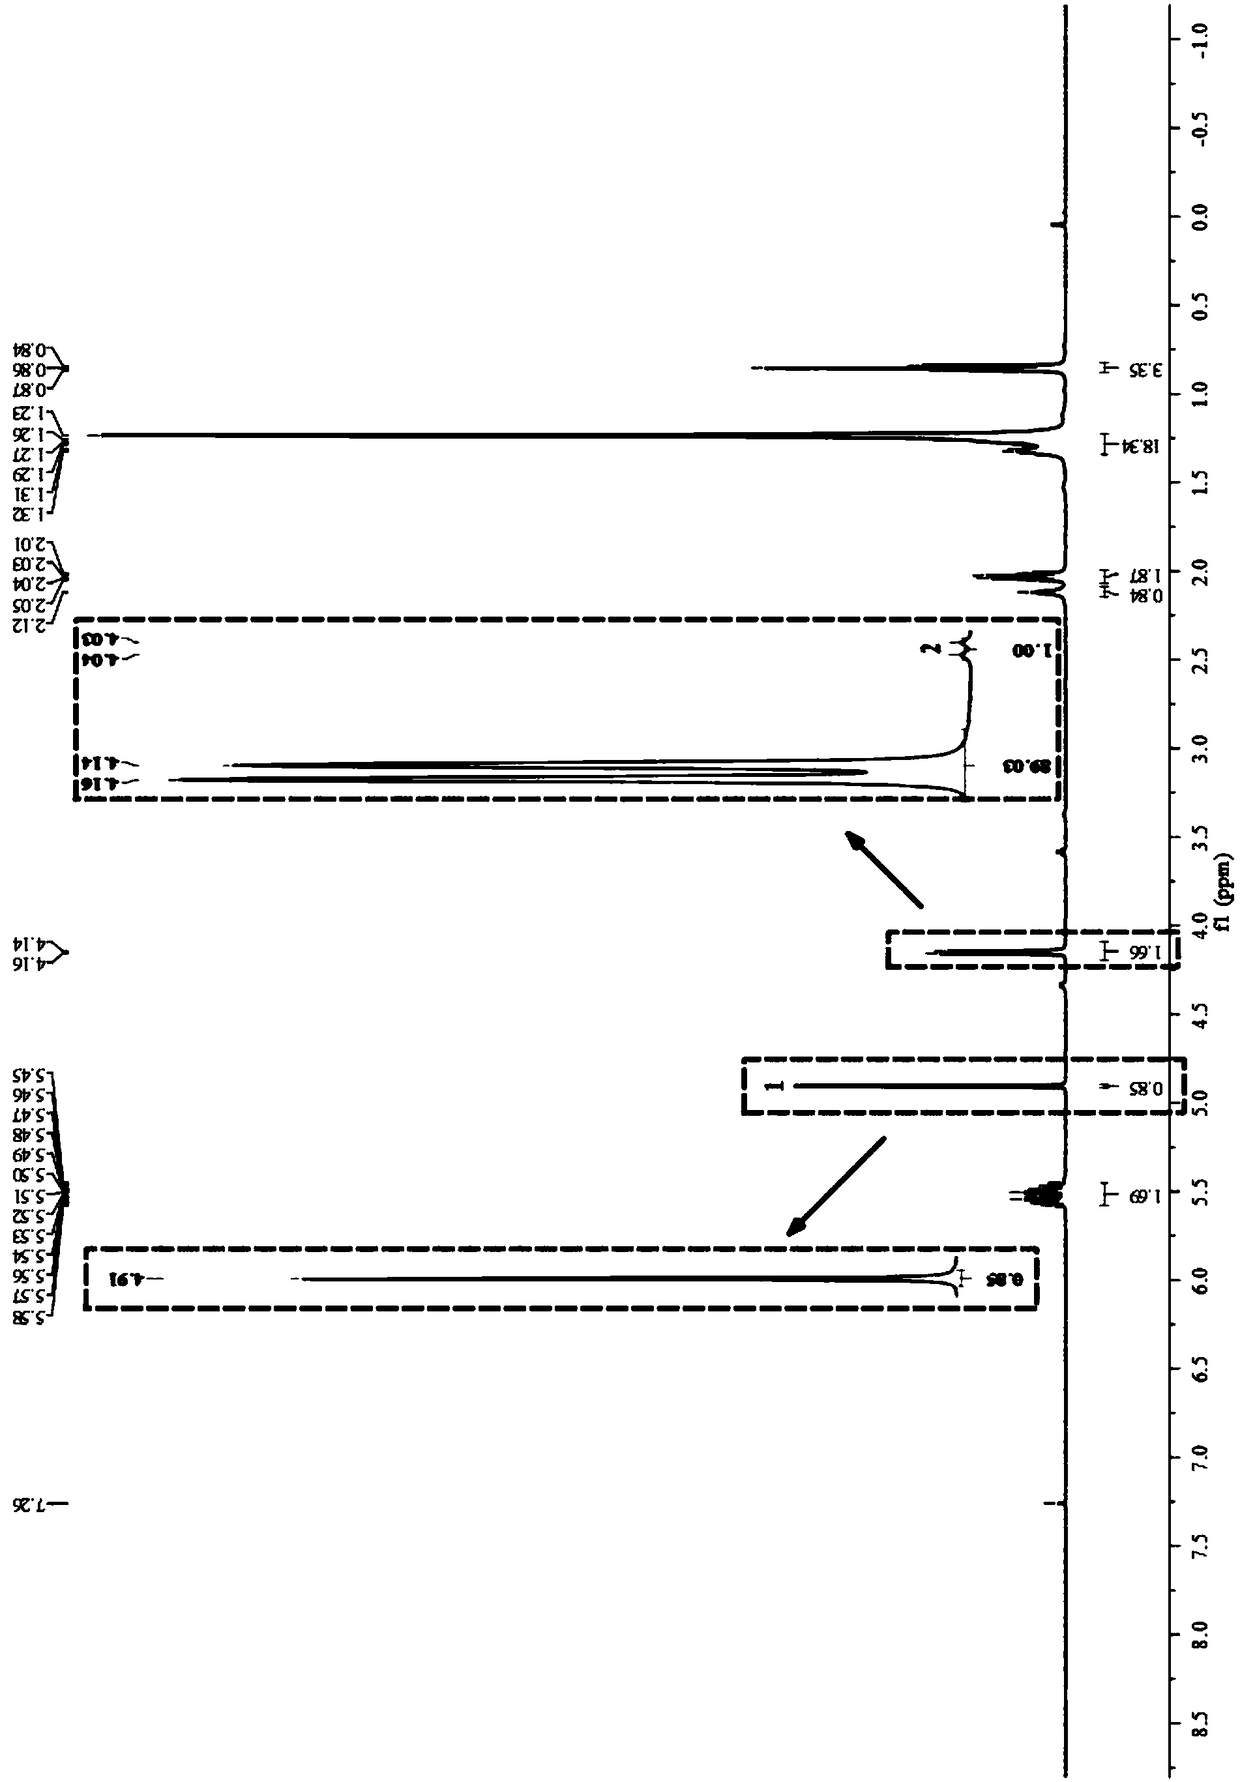 Synthetic method of sex pheromone intermediate of Hyphantria cunea